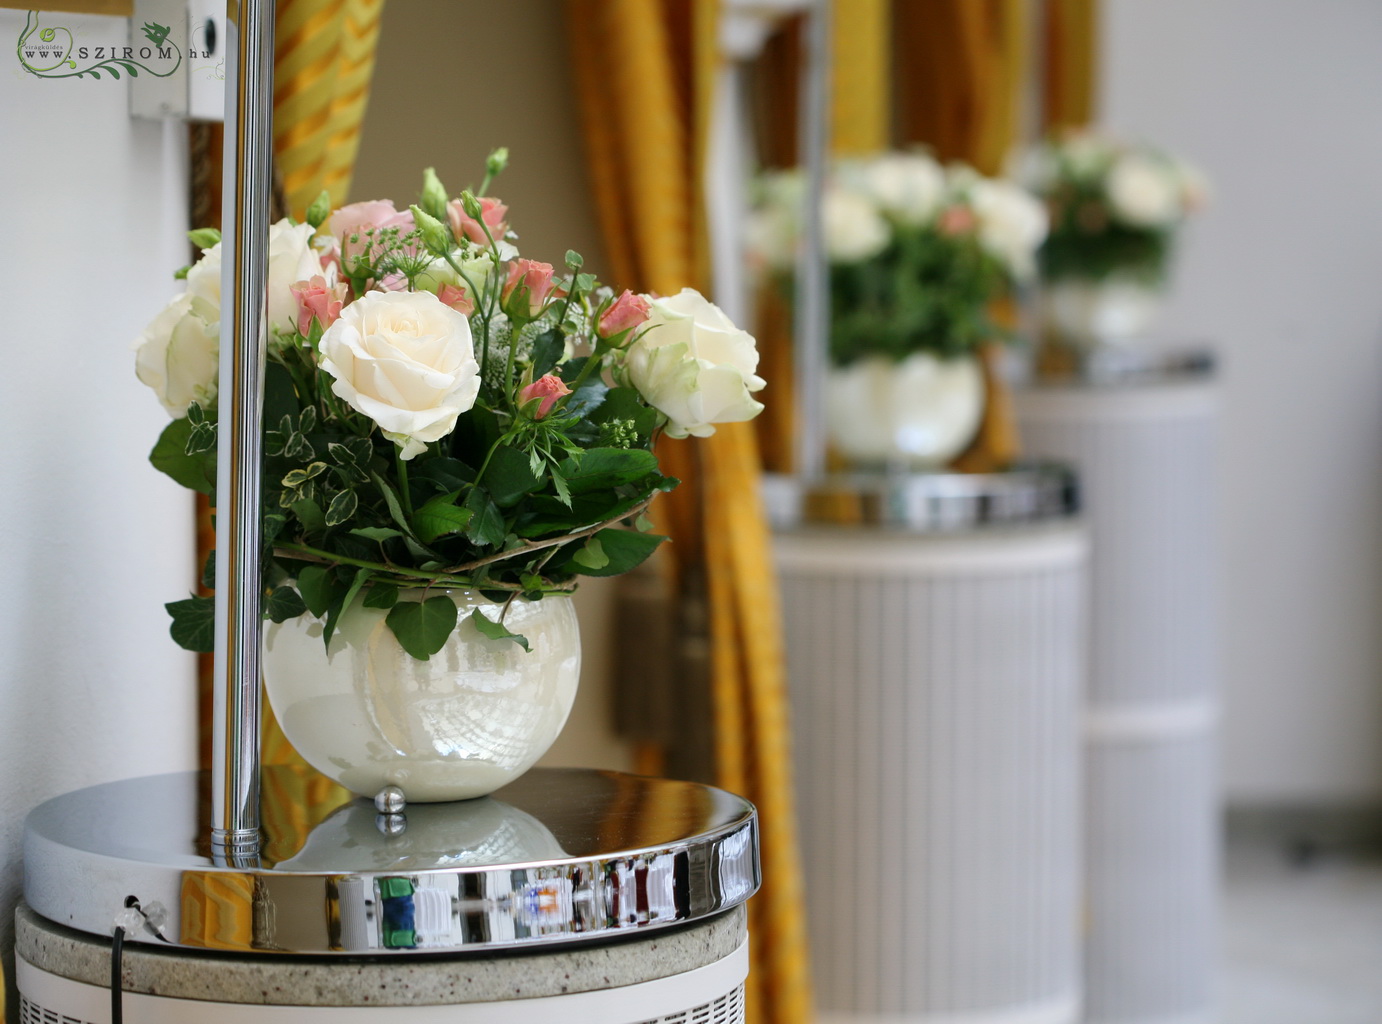 flower delivery Budapest - counter decoration Gerbeaud Atrium (rose, bushy rose, lisianthus, white, peach, pink), wedding